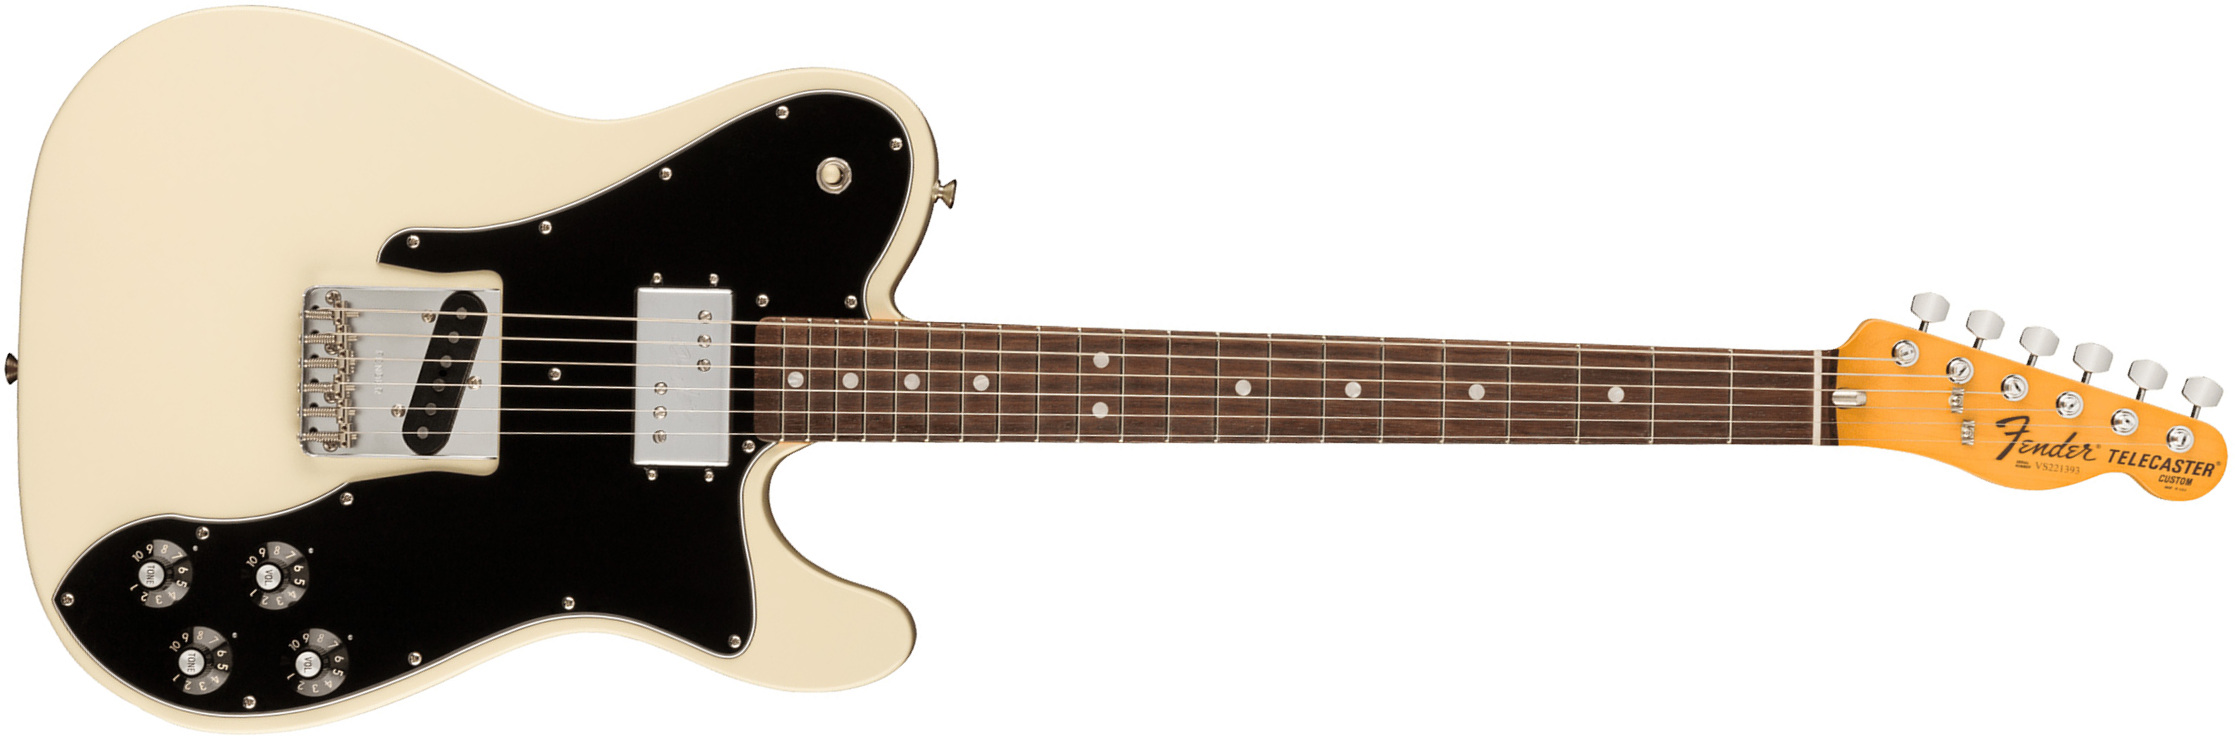 Fender Tele Custom 1977 American Vintage Ii Usa Sh Ht Rw - Olympic White - Tel shape electric guitar - Main picture